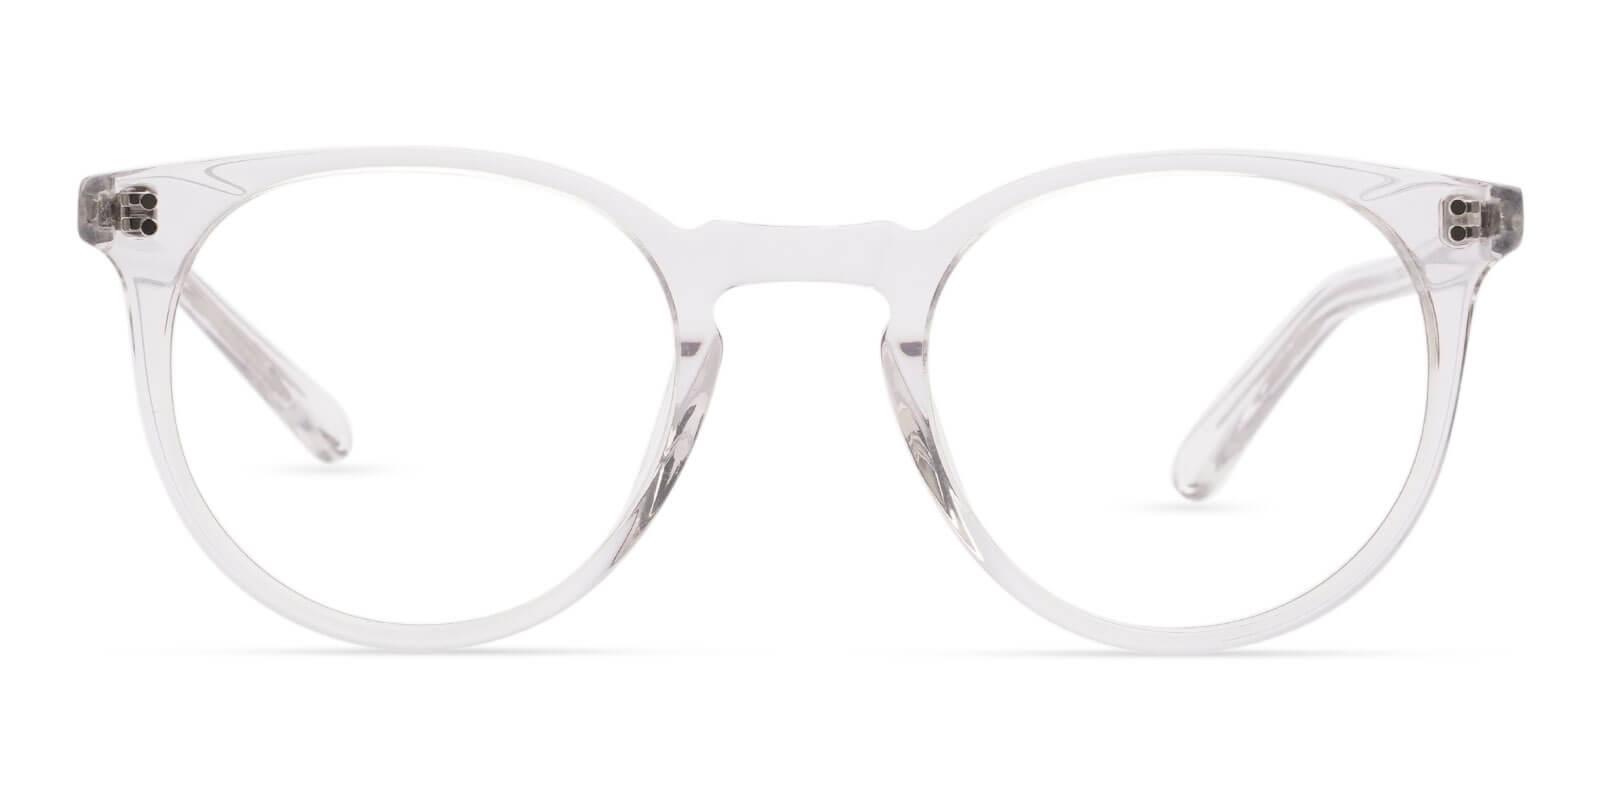 Mercury Translucent Acetate Eyeglasses , UniversalBridgeFit Frames from ABBE Glasses